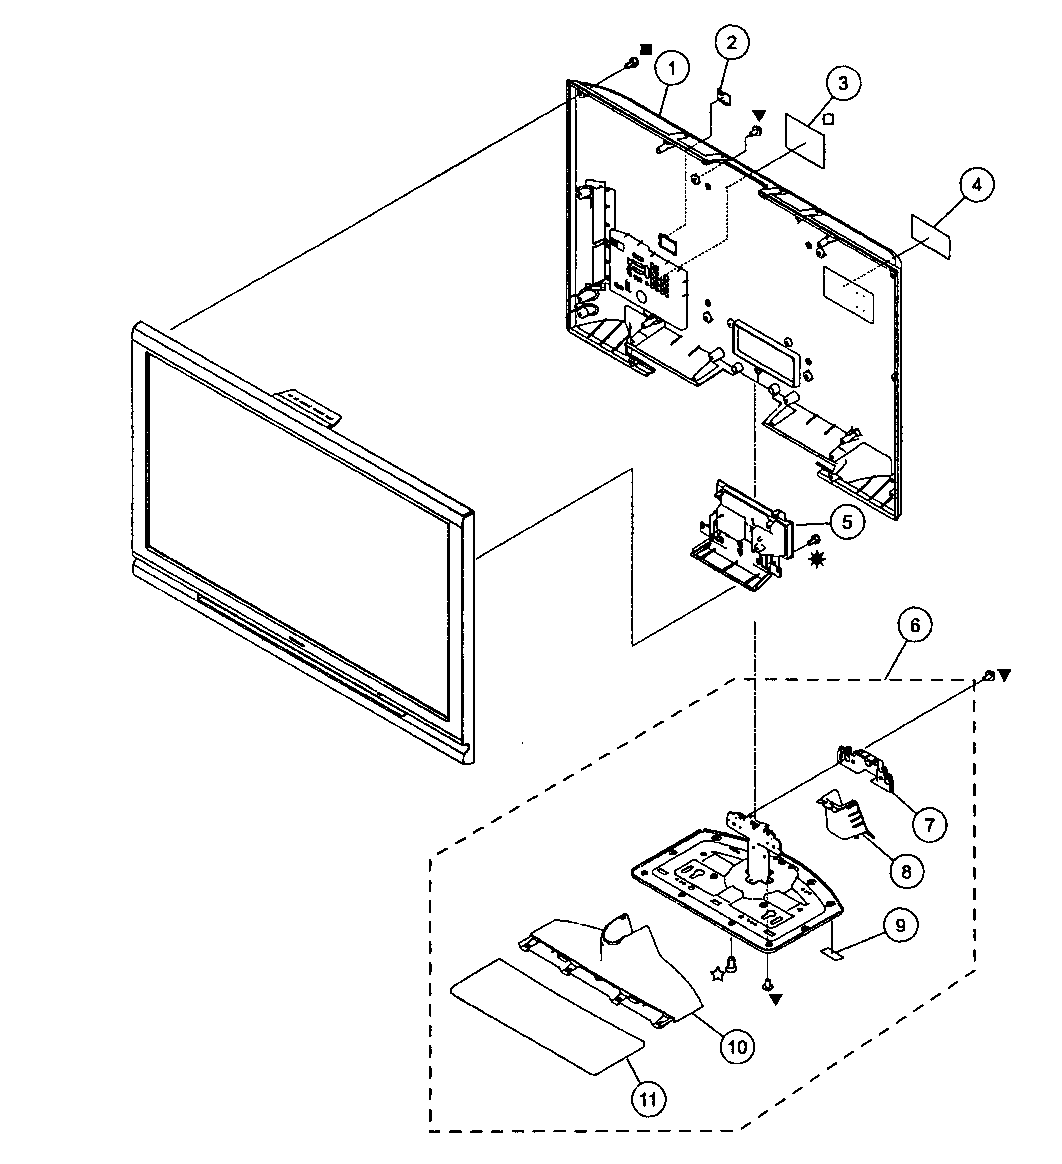 Sony Kdl-40v4100 Service Manual